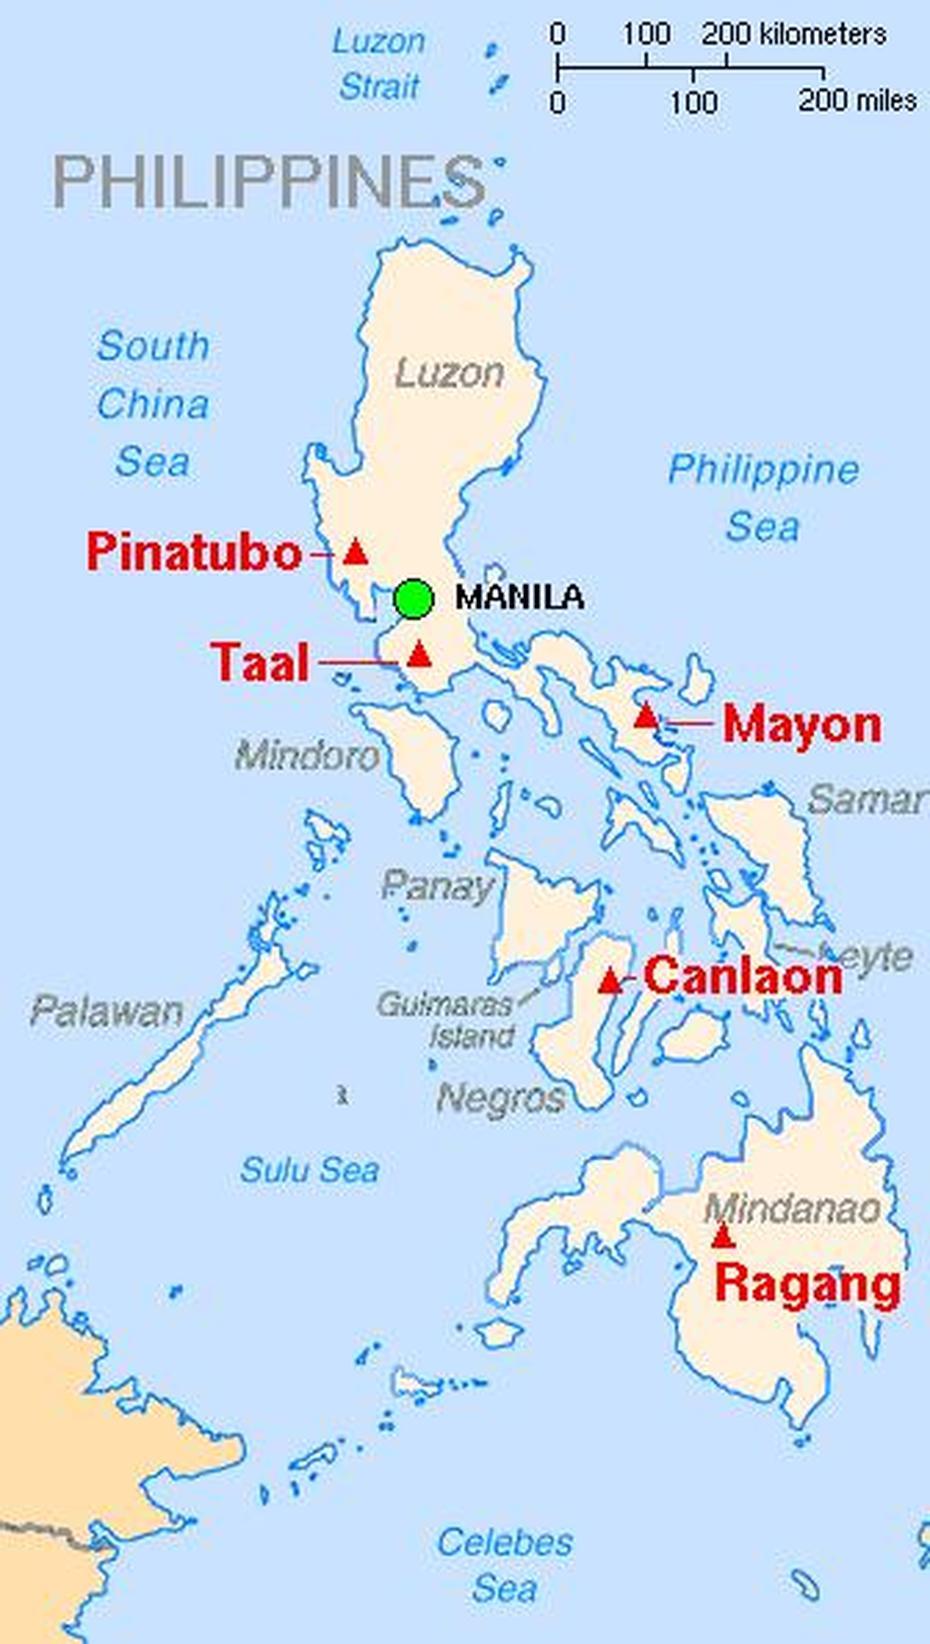 Caramoan Island Philippines, Tagudin Ilocos Sur Philippines, Home, Ragan Sur, Philippines